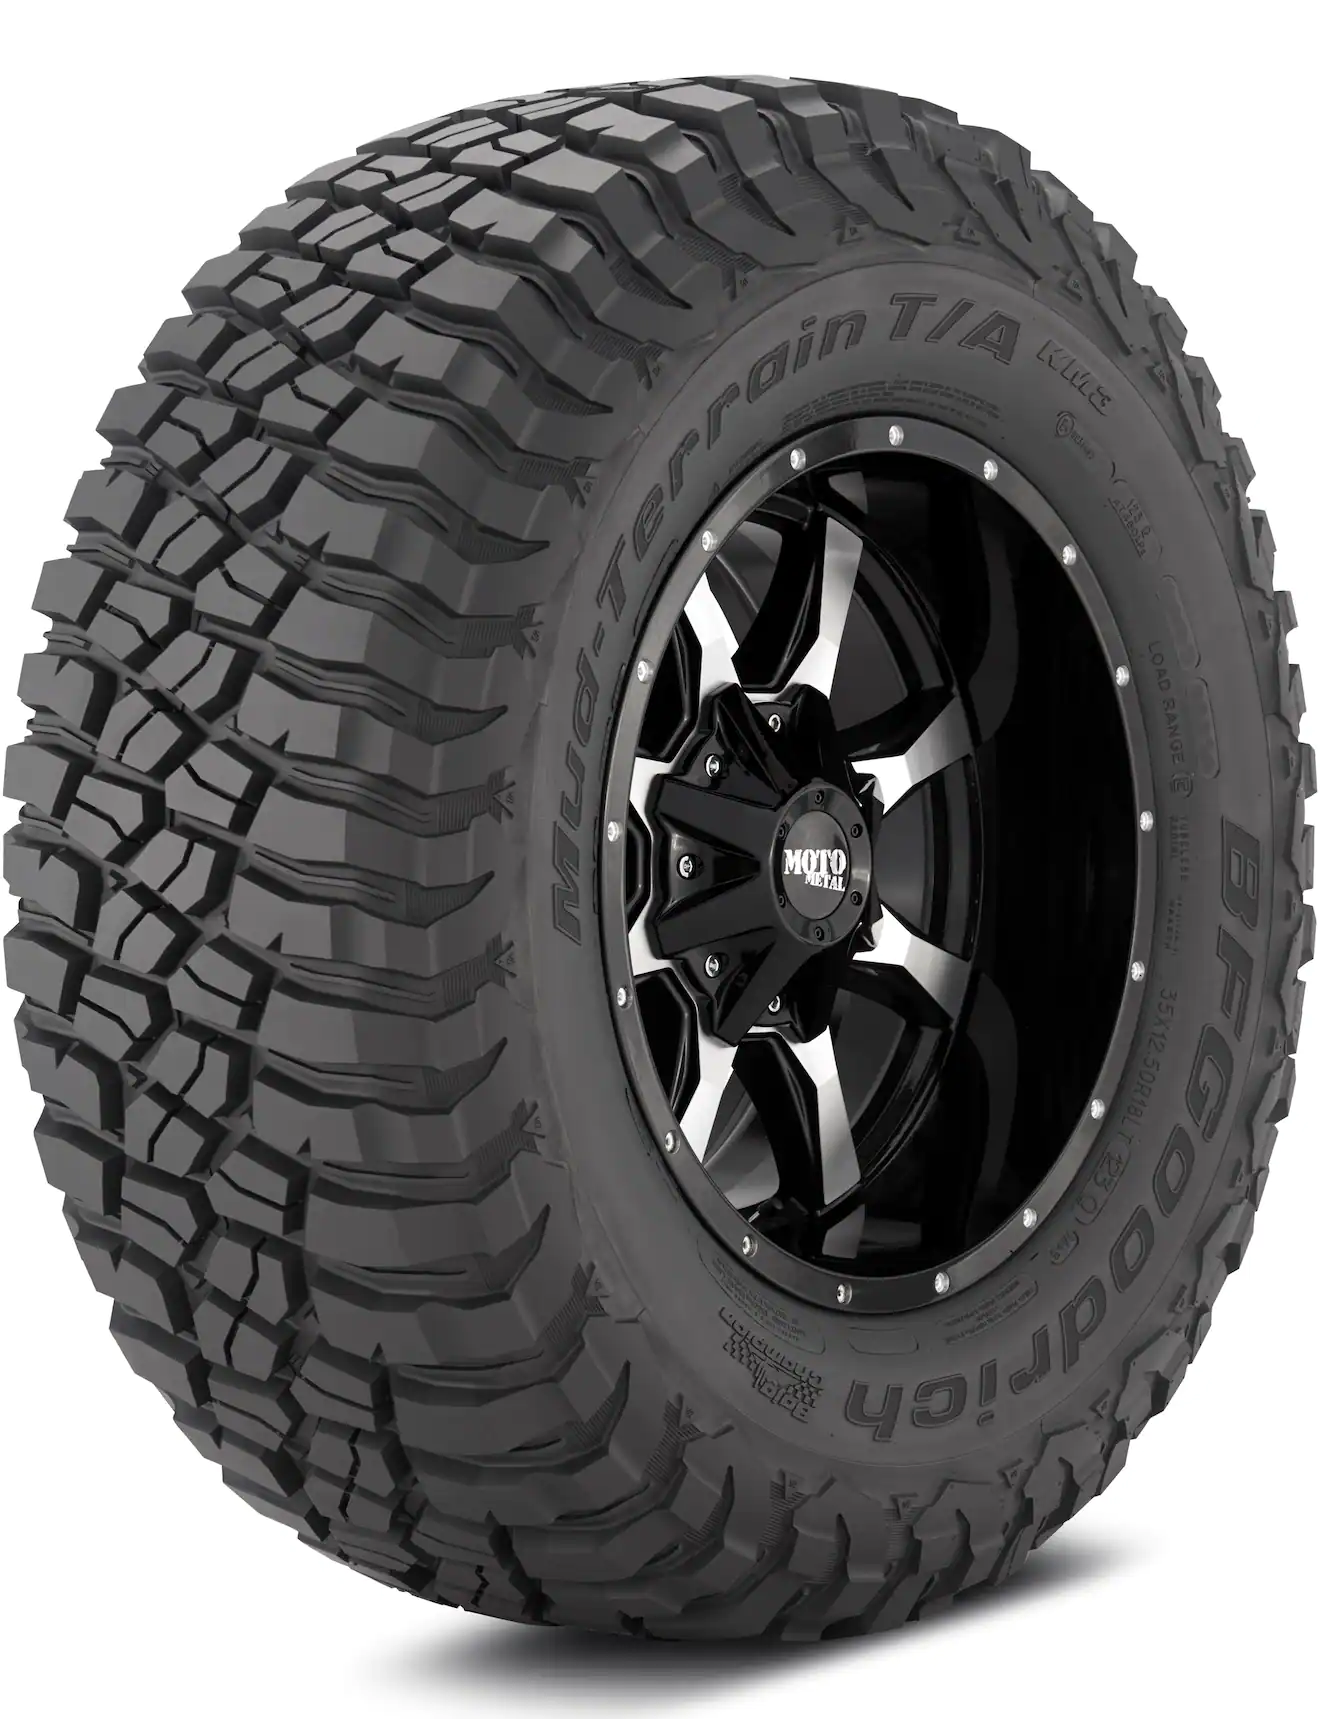 BFGoodrich Mud-Terrain T/A KM3 tire